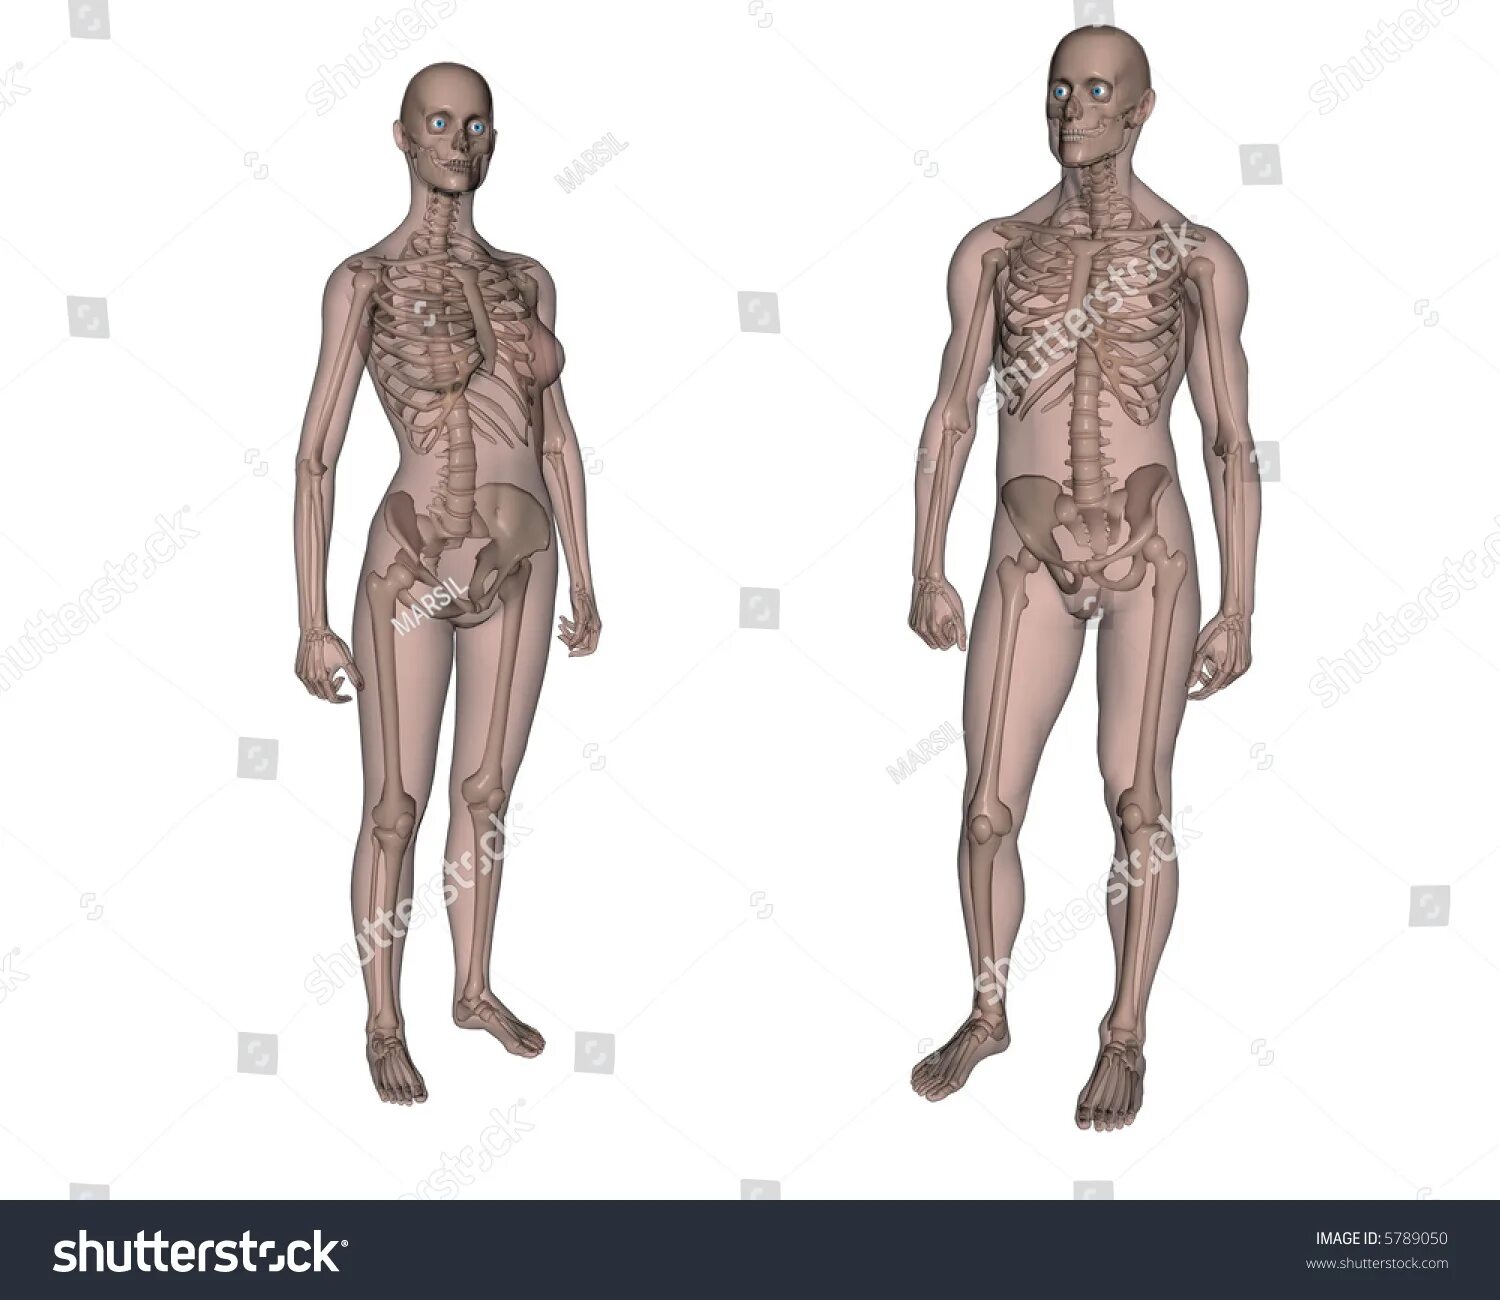 Скелет мужчины. Скелет мужчины и женщины. Скелет мужчины и скелет женщины. Анатомия мужчины и женщины.